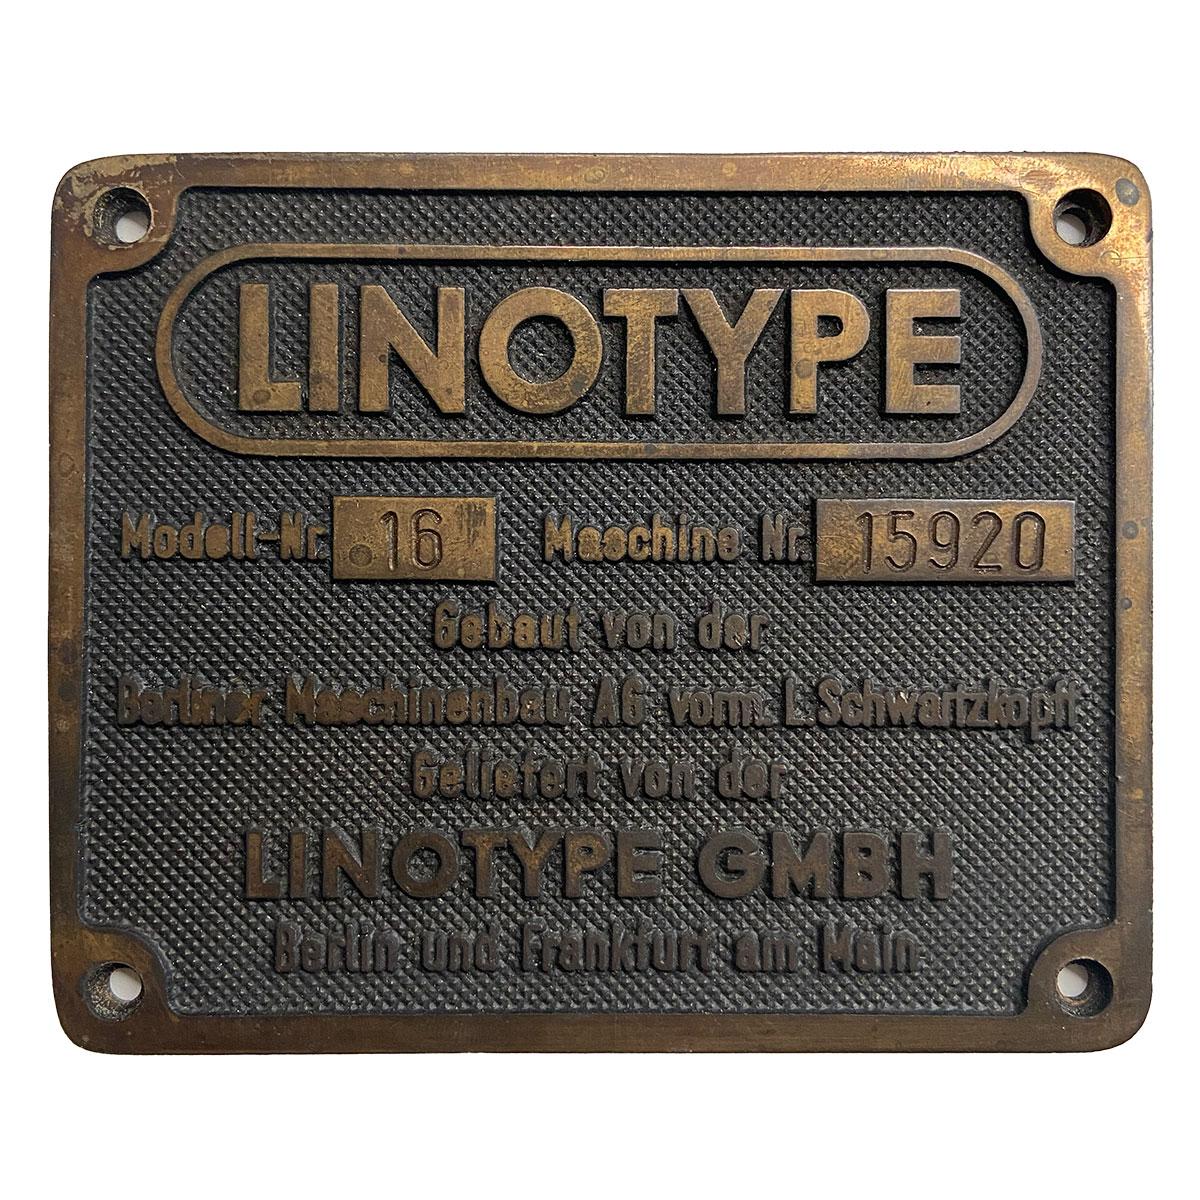 Linotype-Typenschild (Modell 16)